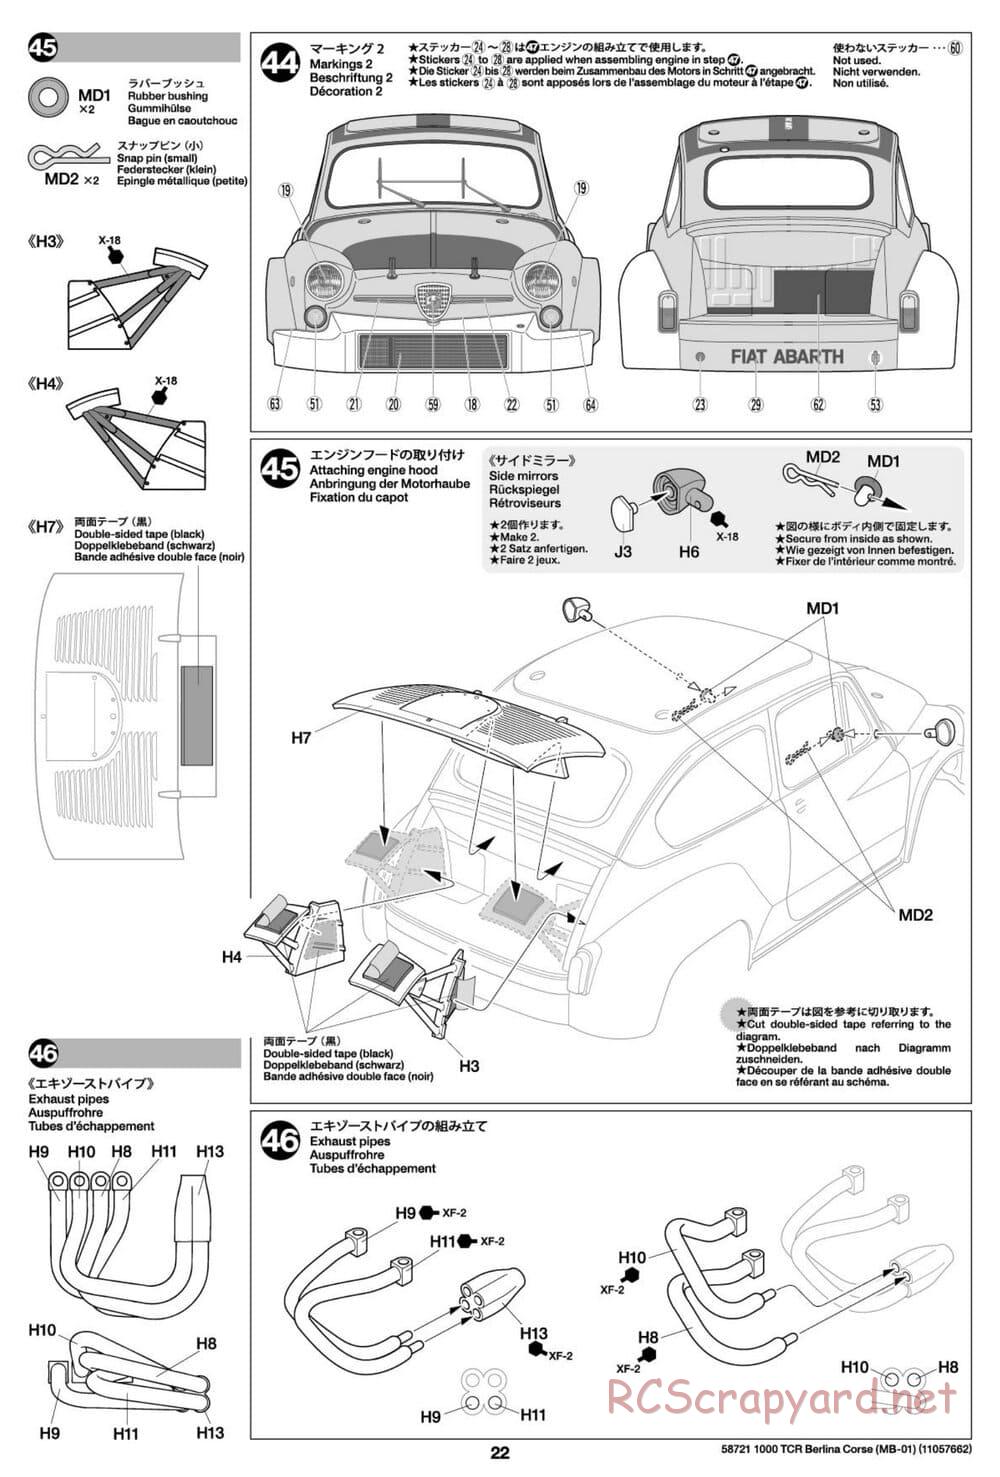 Tamiya - Fiat Abarth 1000 TCR Berlina Corsa - MB-01 Chassis - Manual - Page 22